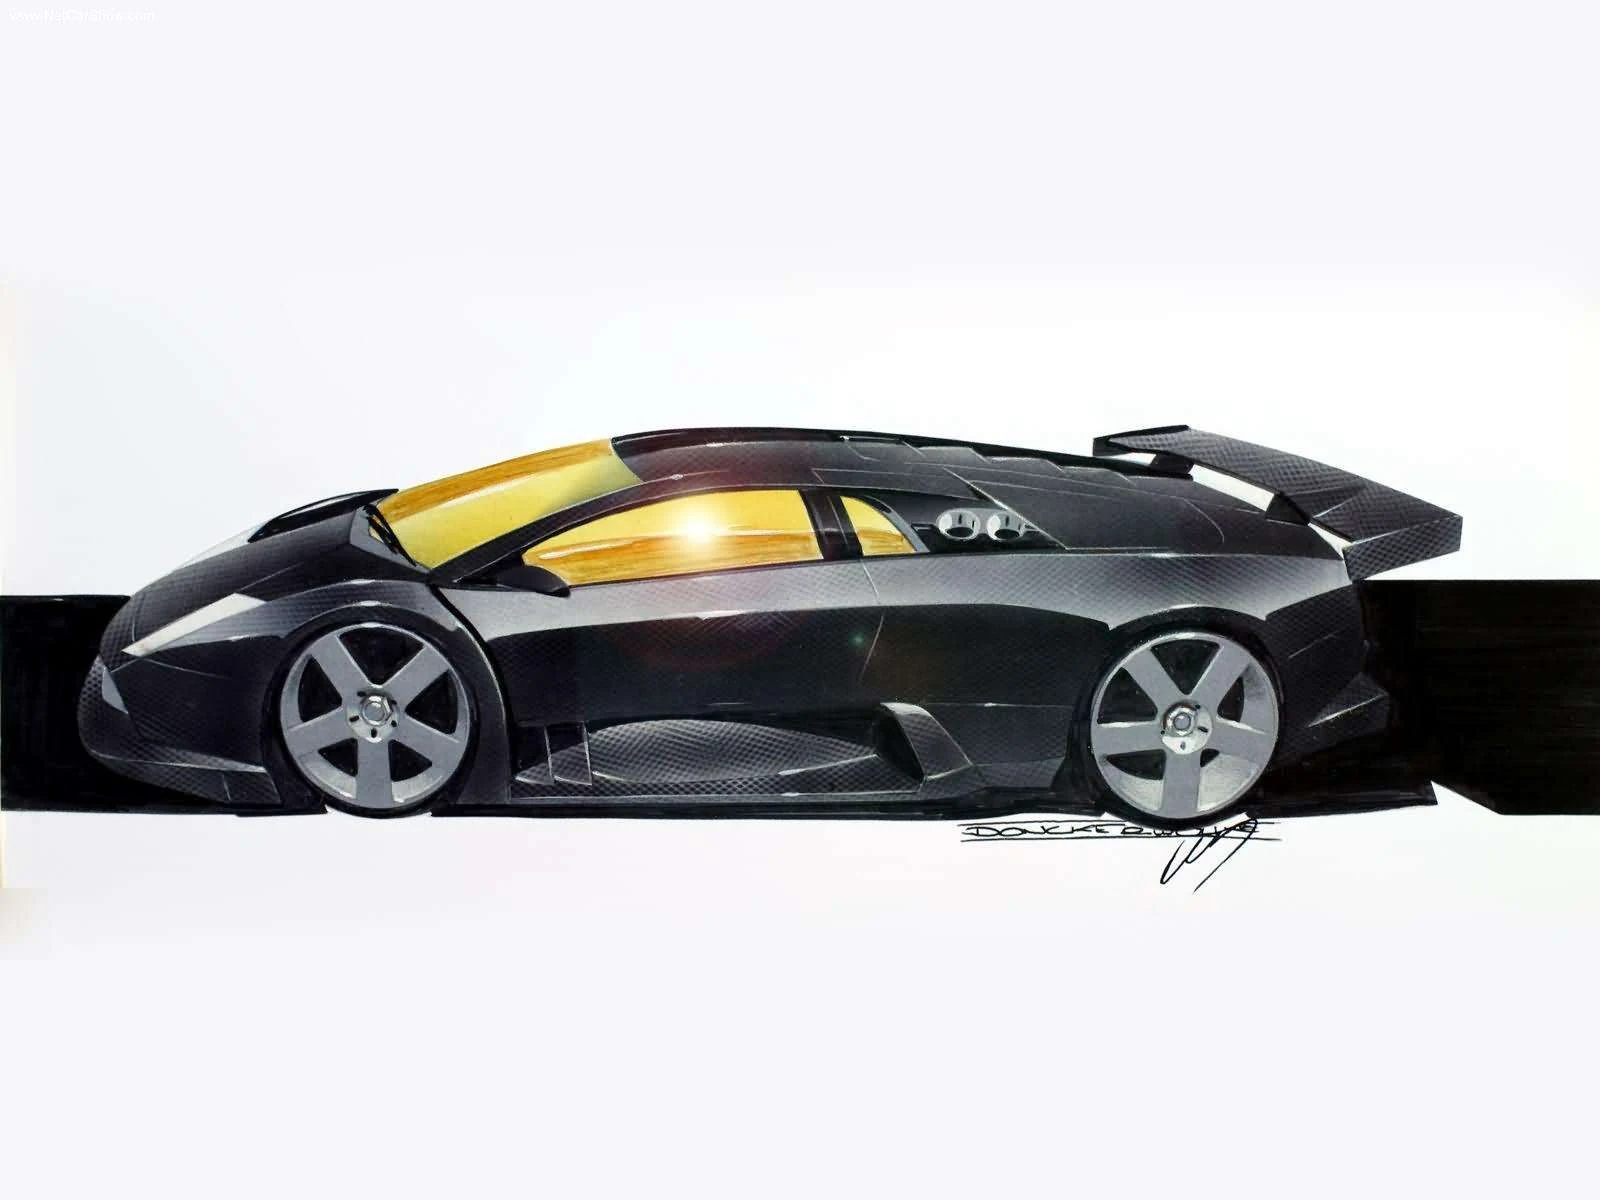 Hình ảnh siêu xe Lamborghini Murcielago RGT 2003 & nội ngoại thất